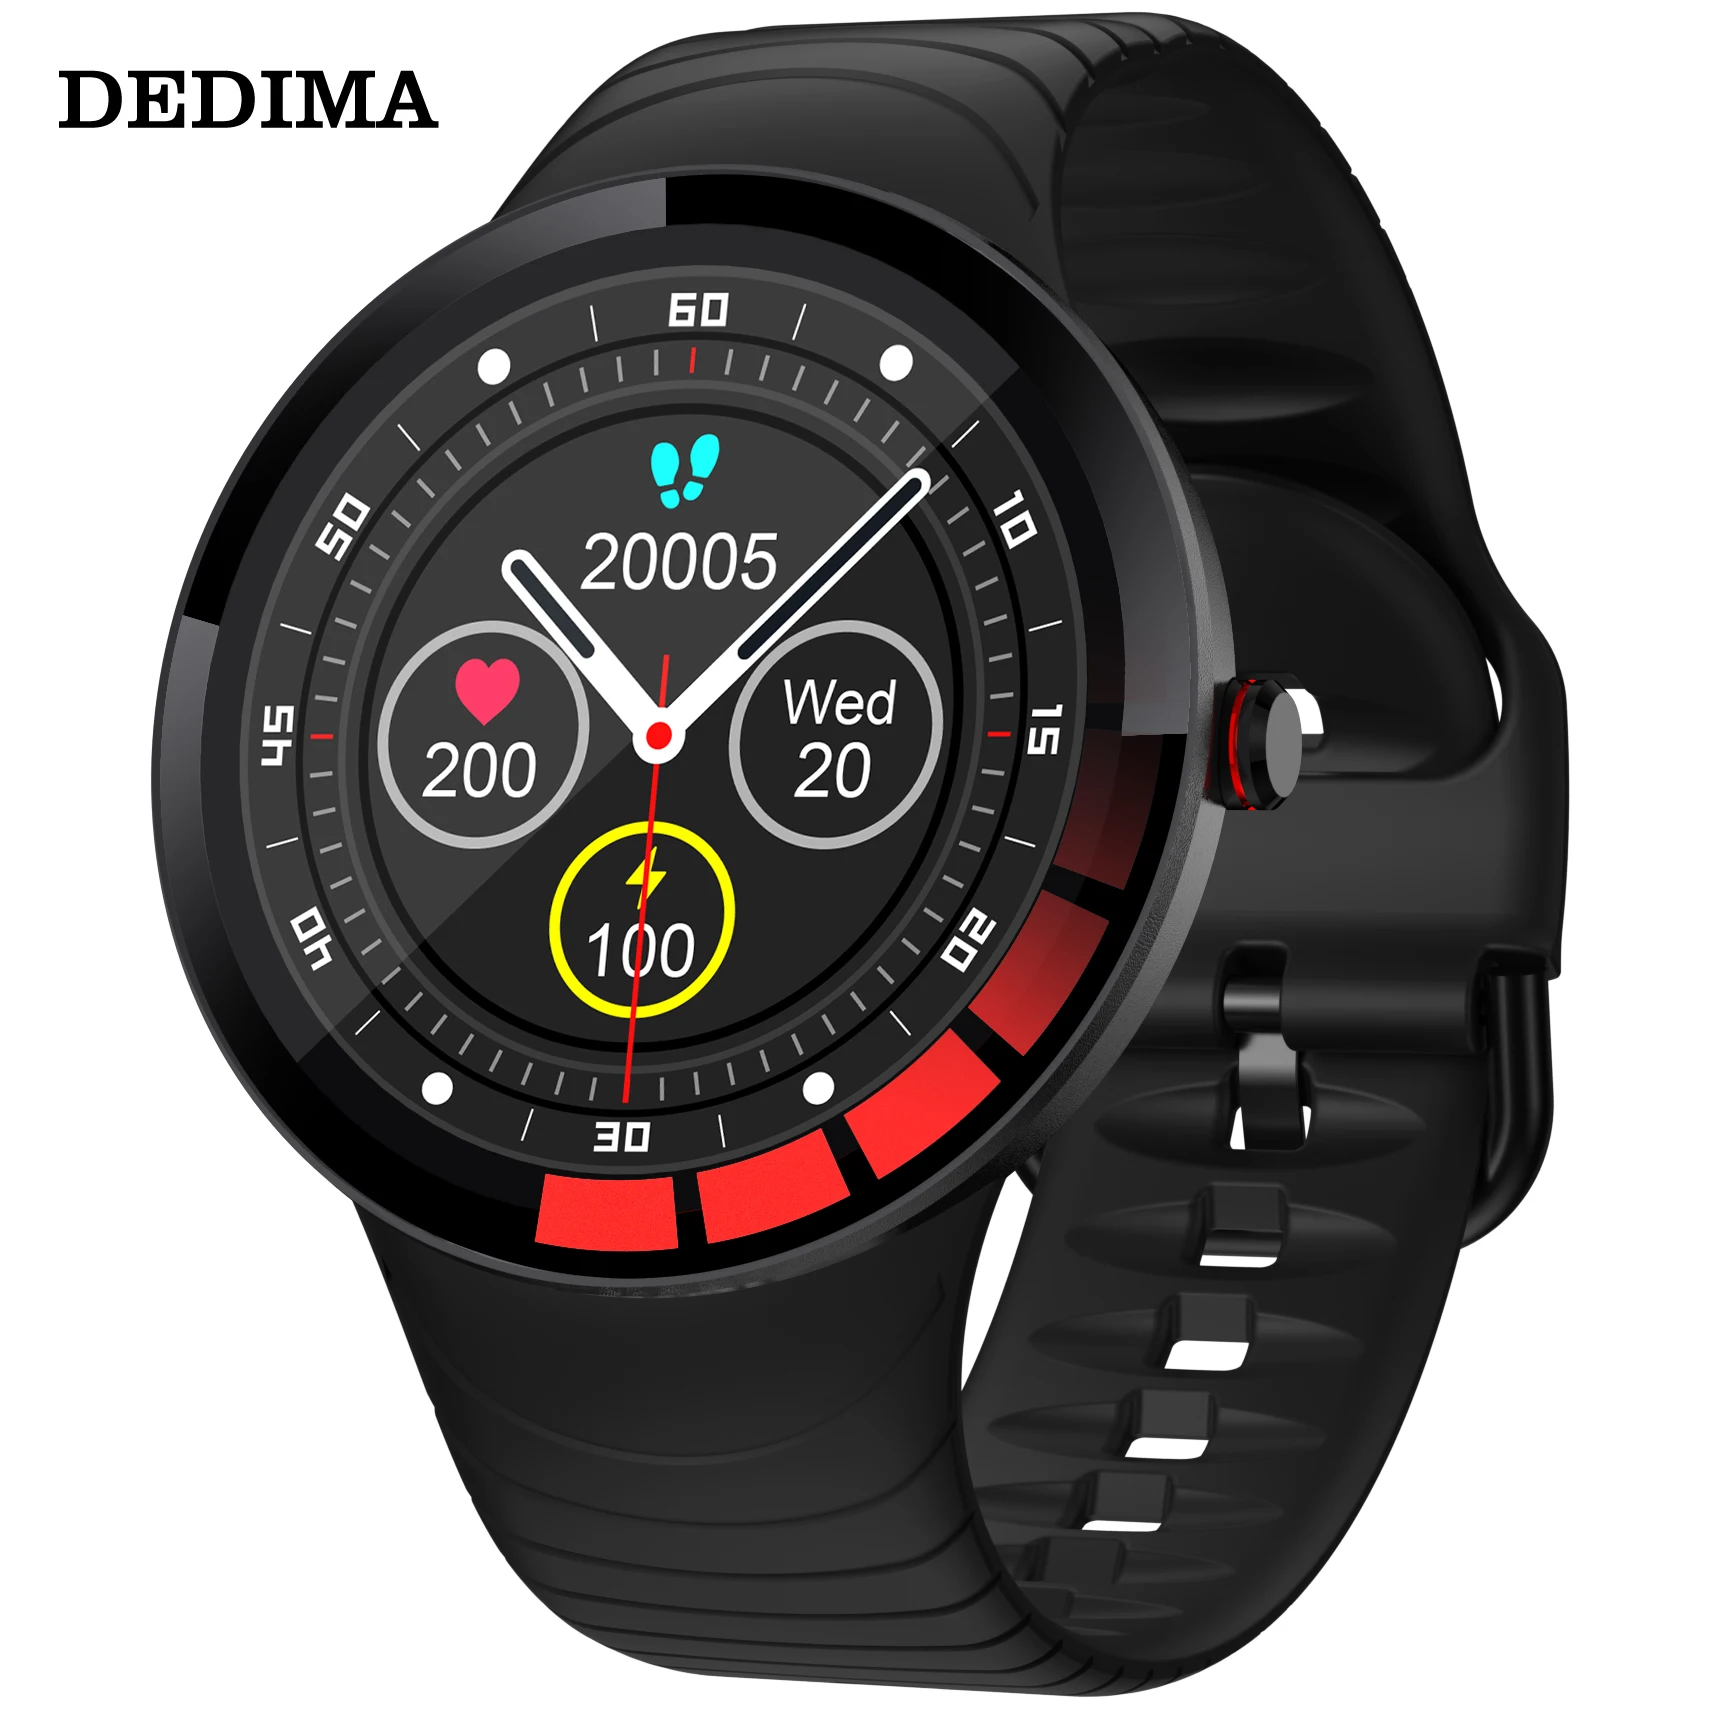 In stock DEDIMA Verge Lite Smartwatch IP68 Smart Watch GPS GLONASS Long Battery Life AMOLED Display for Android iOS